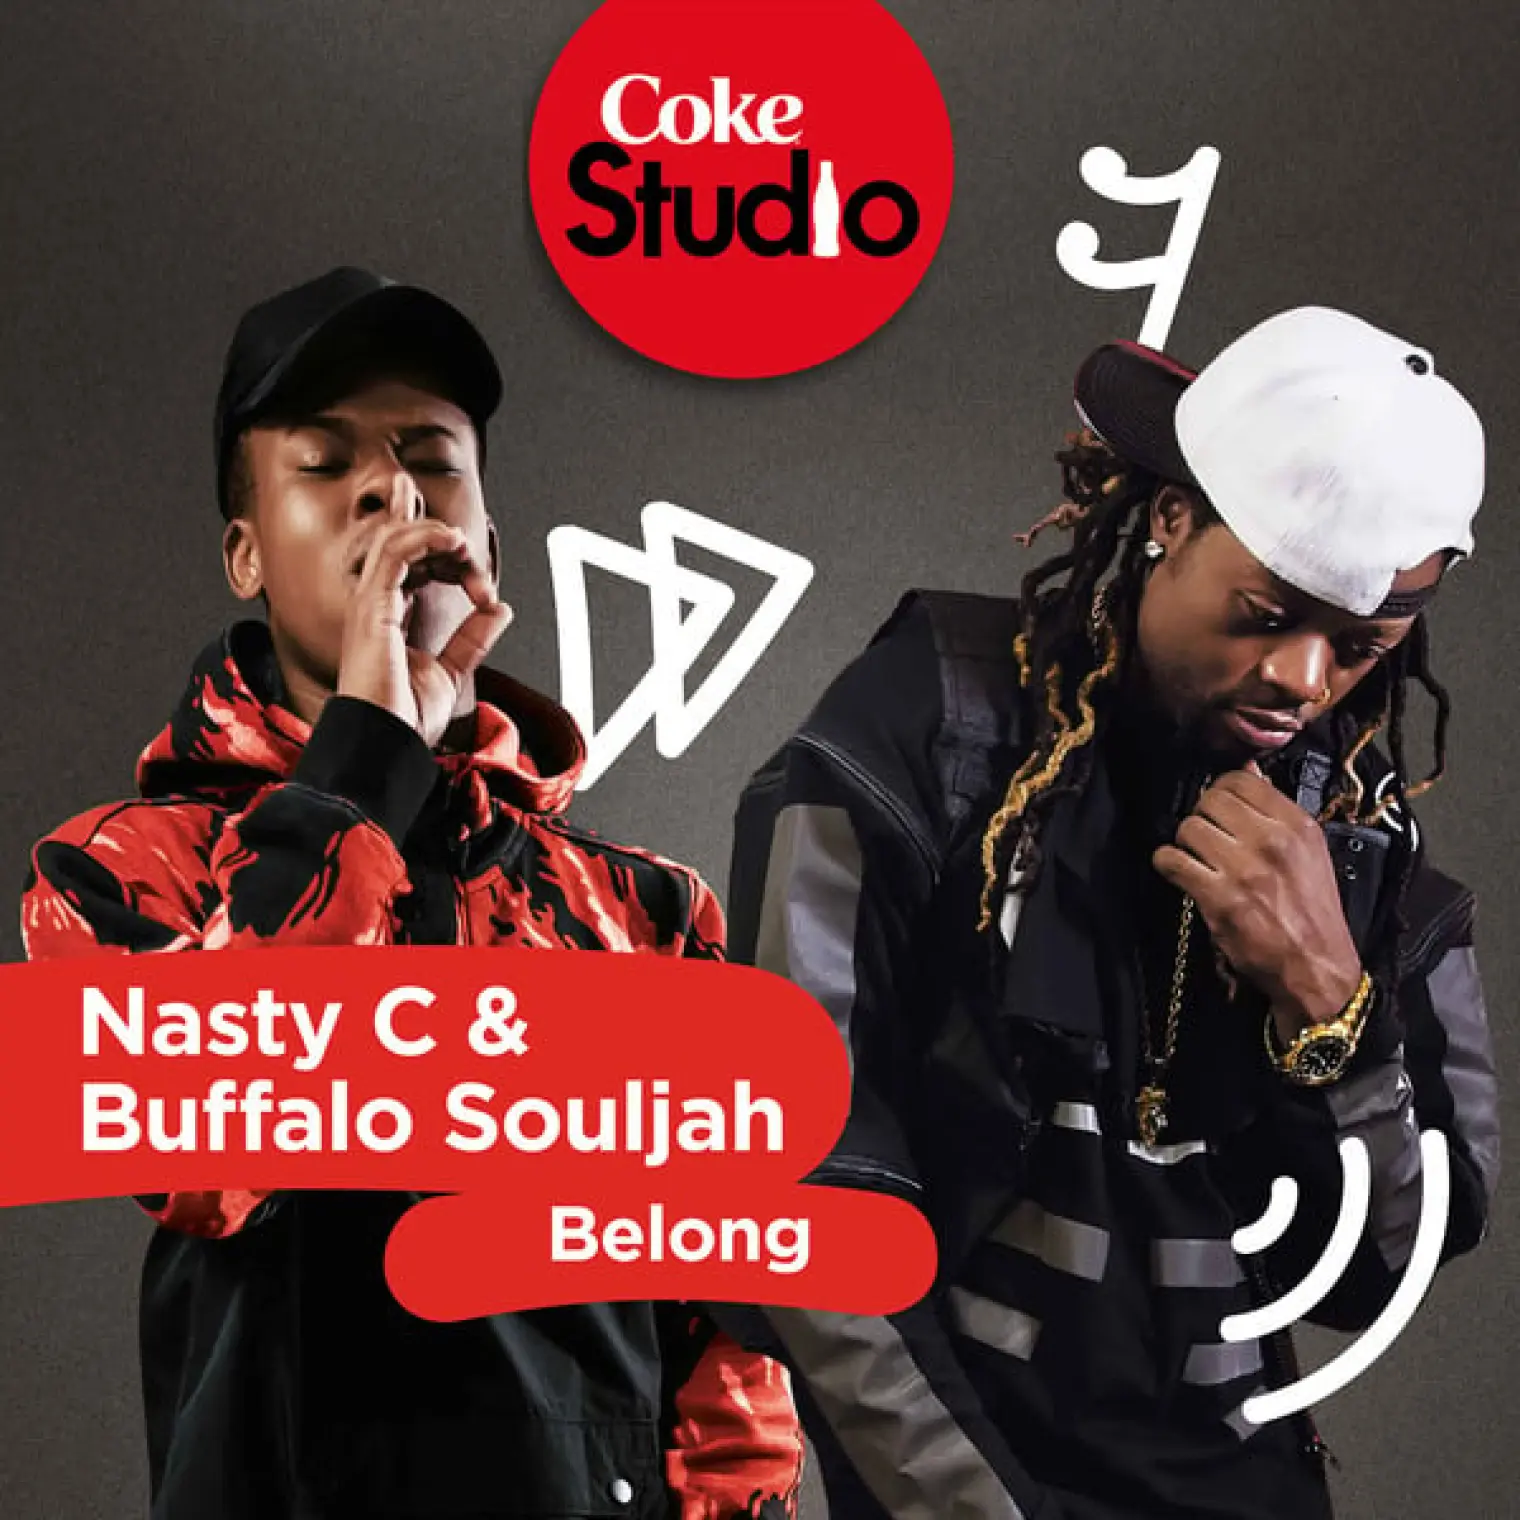 Coke Studio South Africa Season 2 Belong Single -  Nasty C And Buffalo Souljah 